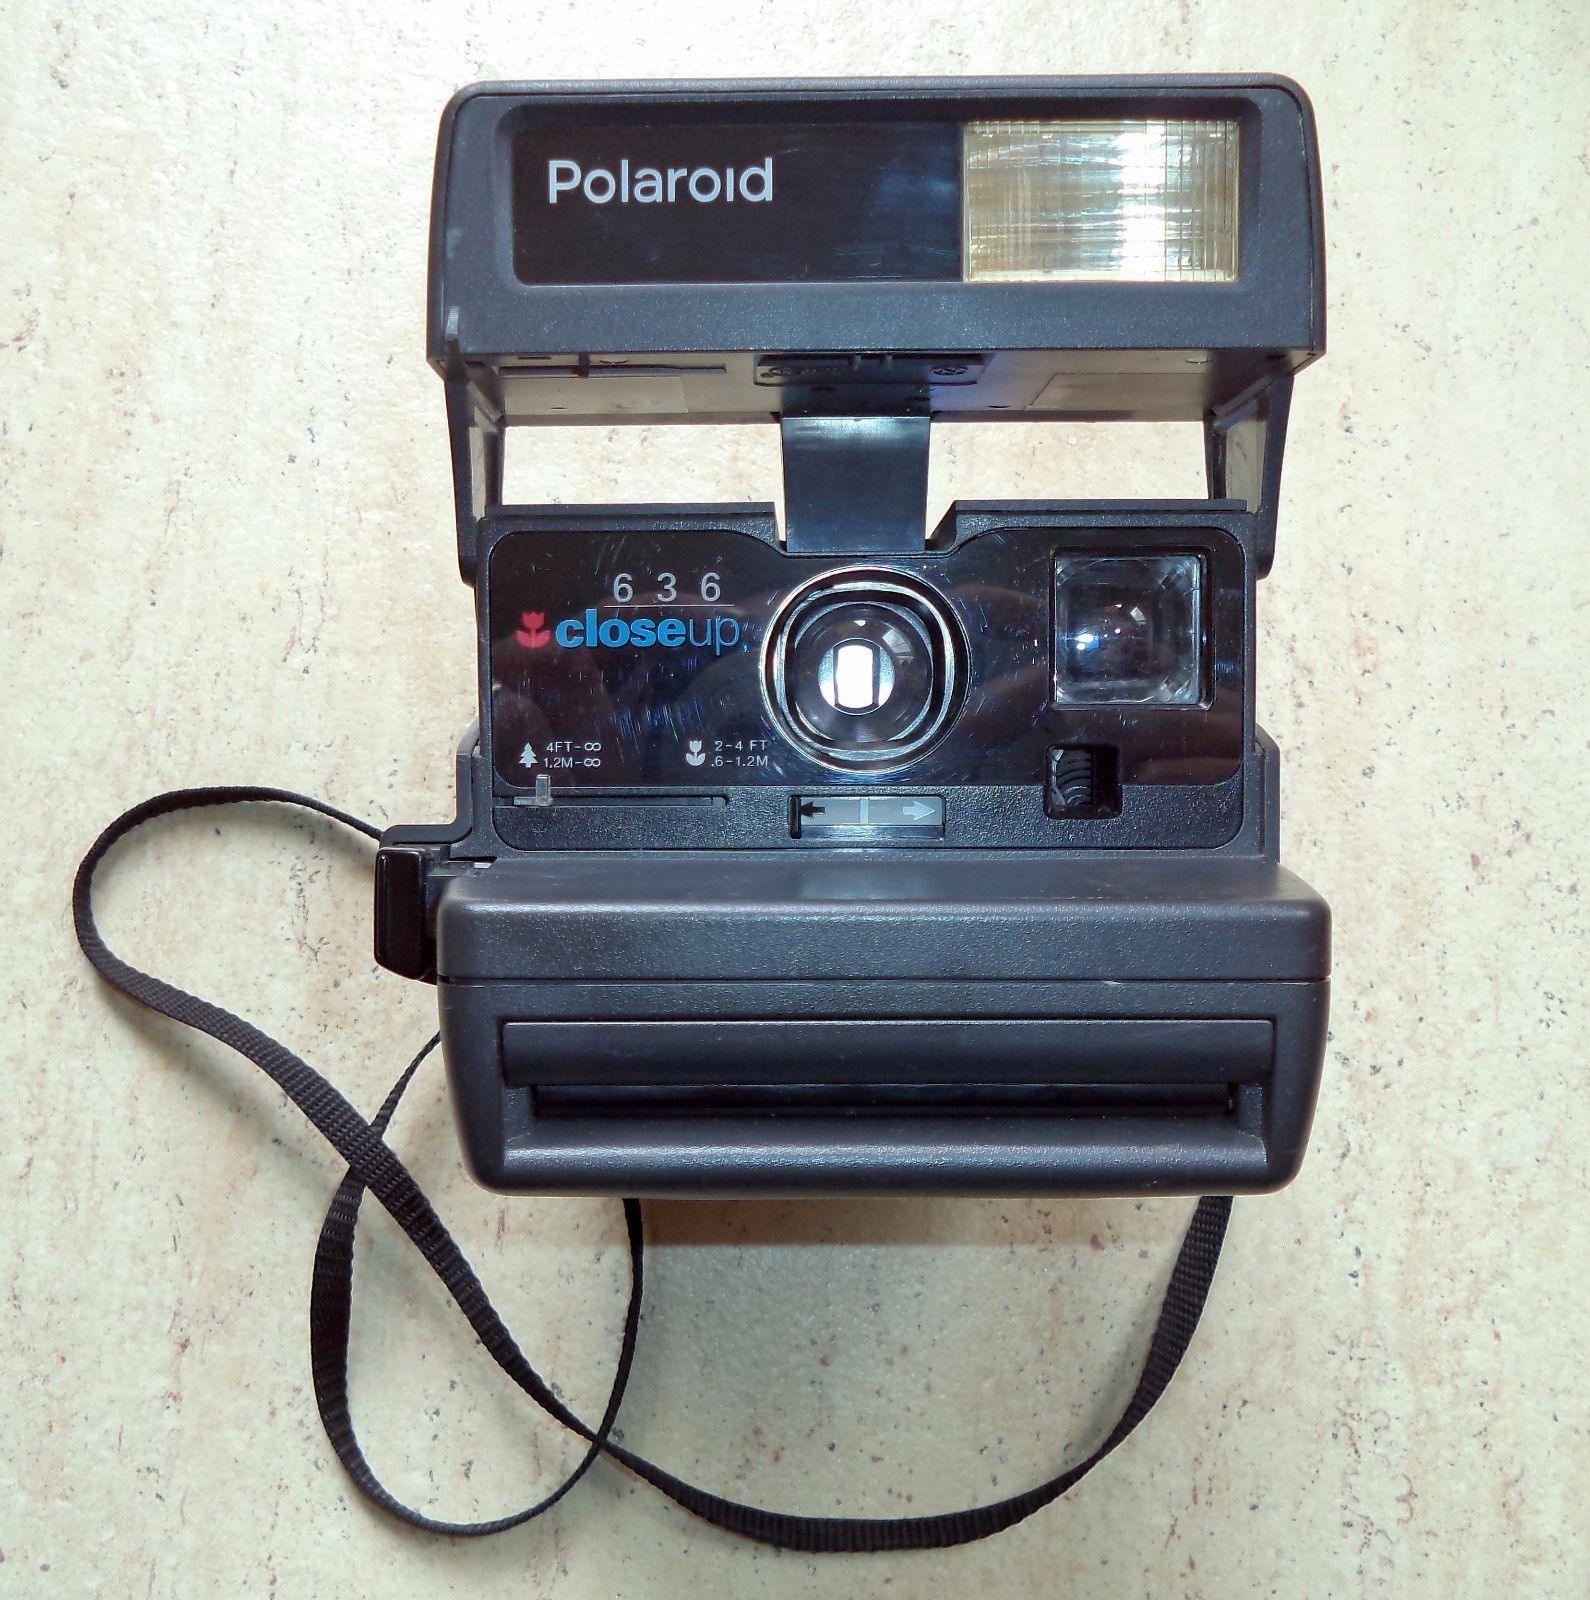 Polaroid 636 CloseUp vintage Instant Film Camera. TESTED, WORKING ...